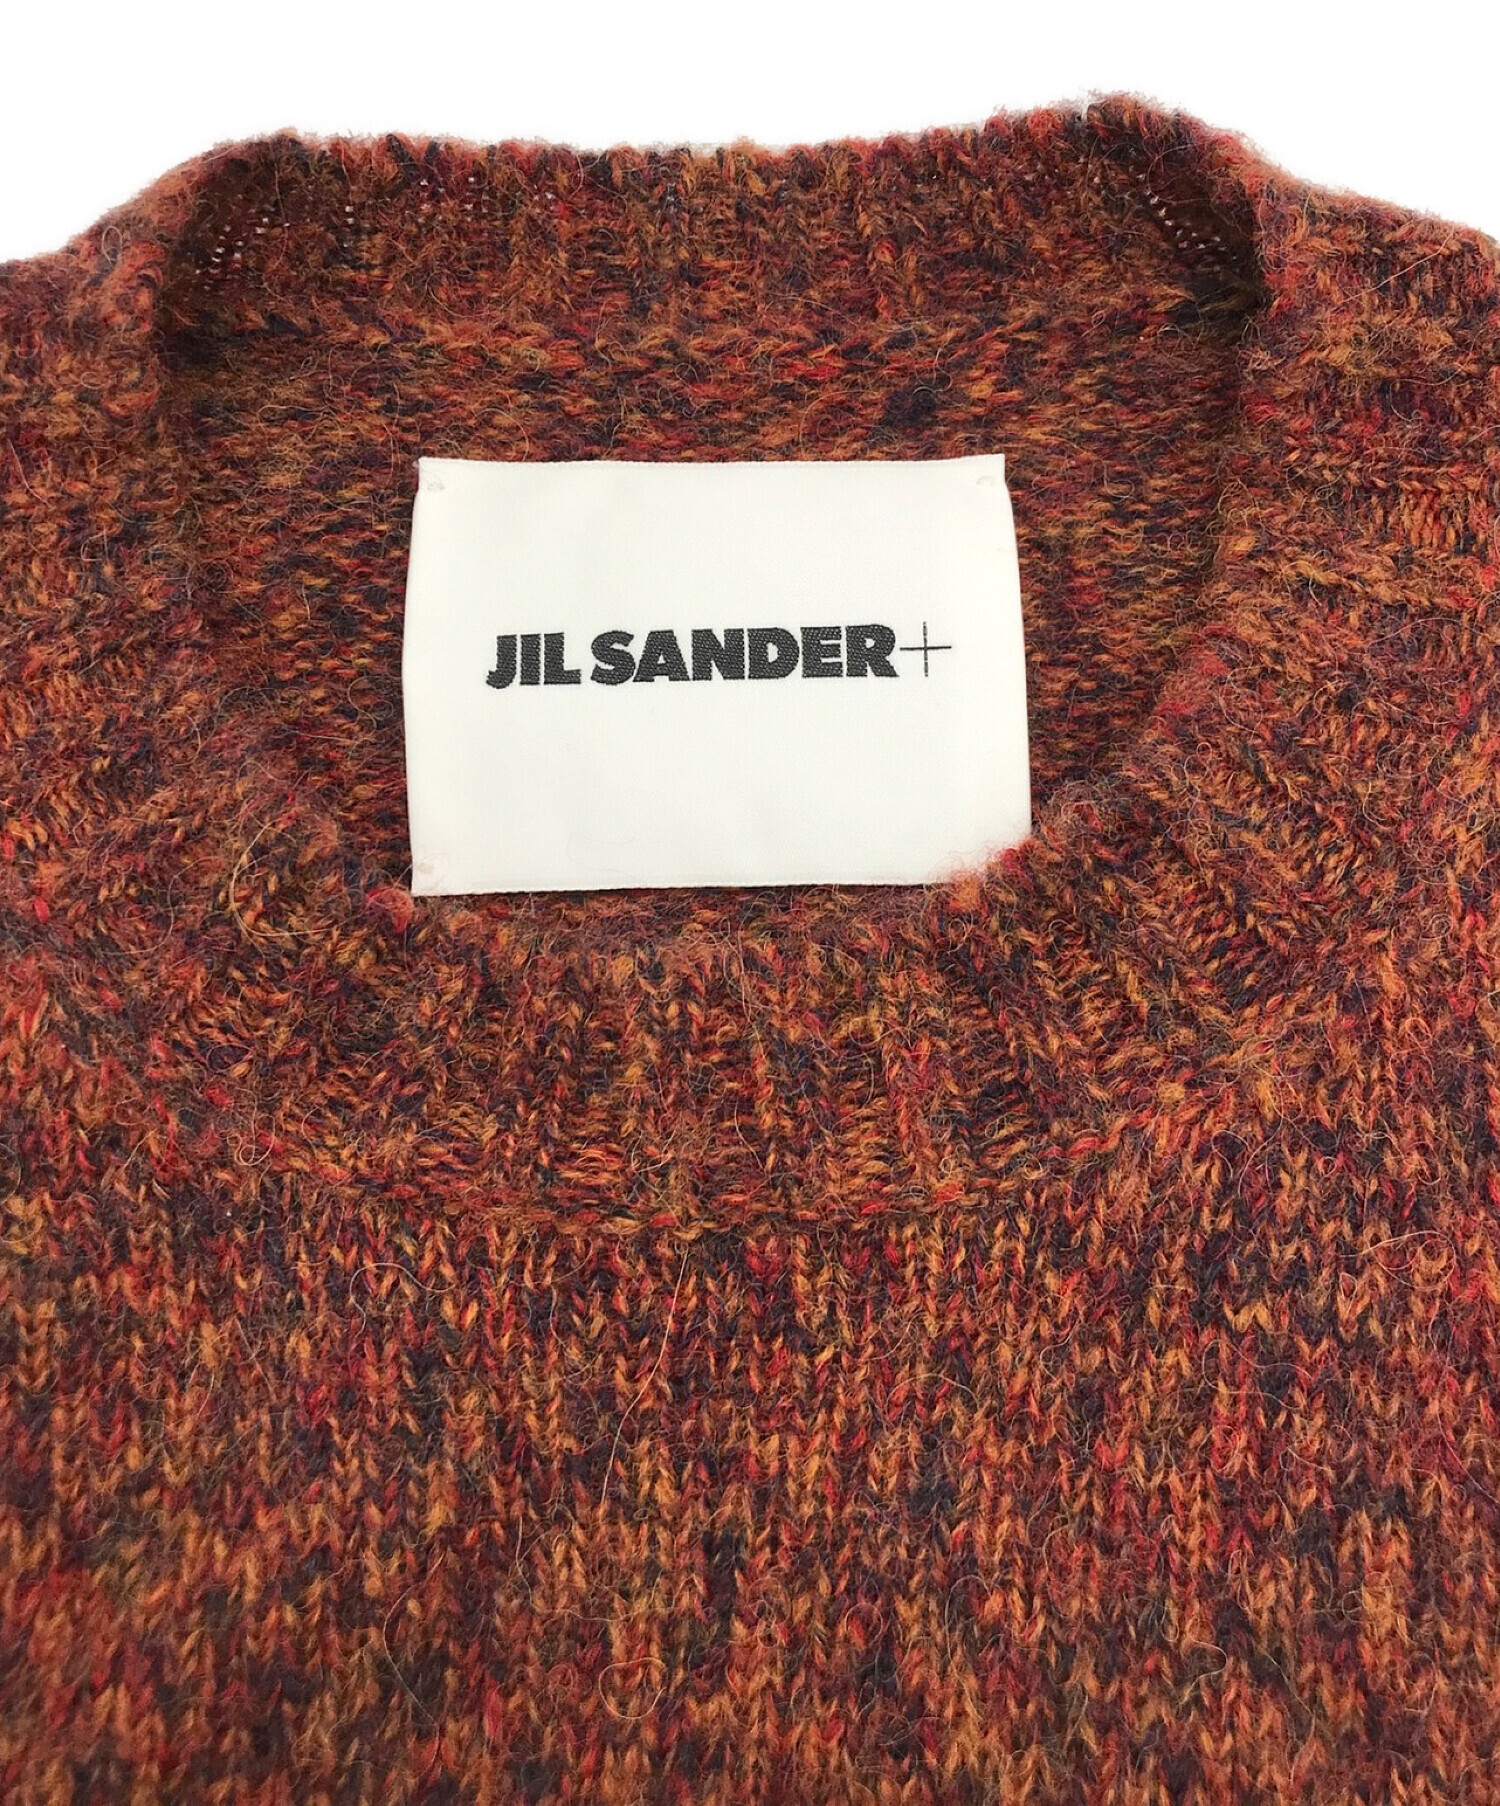 JIL SANDER+ (ジルサンダープラス) クルーネックニット ブラウン サイズ:36